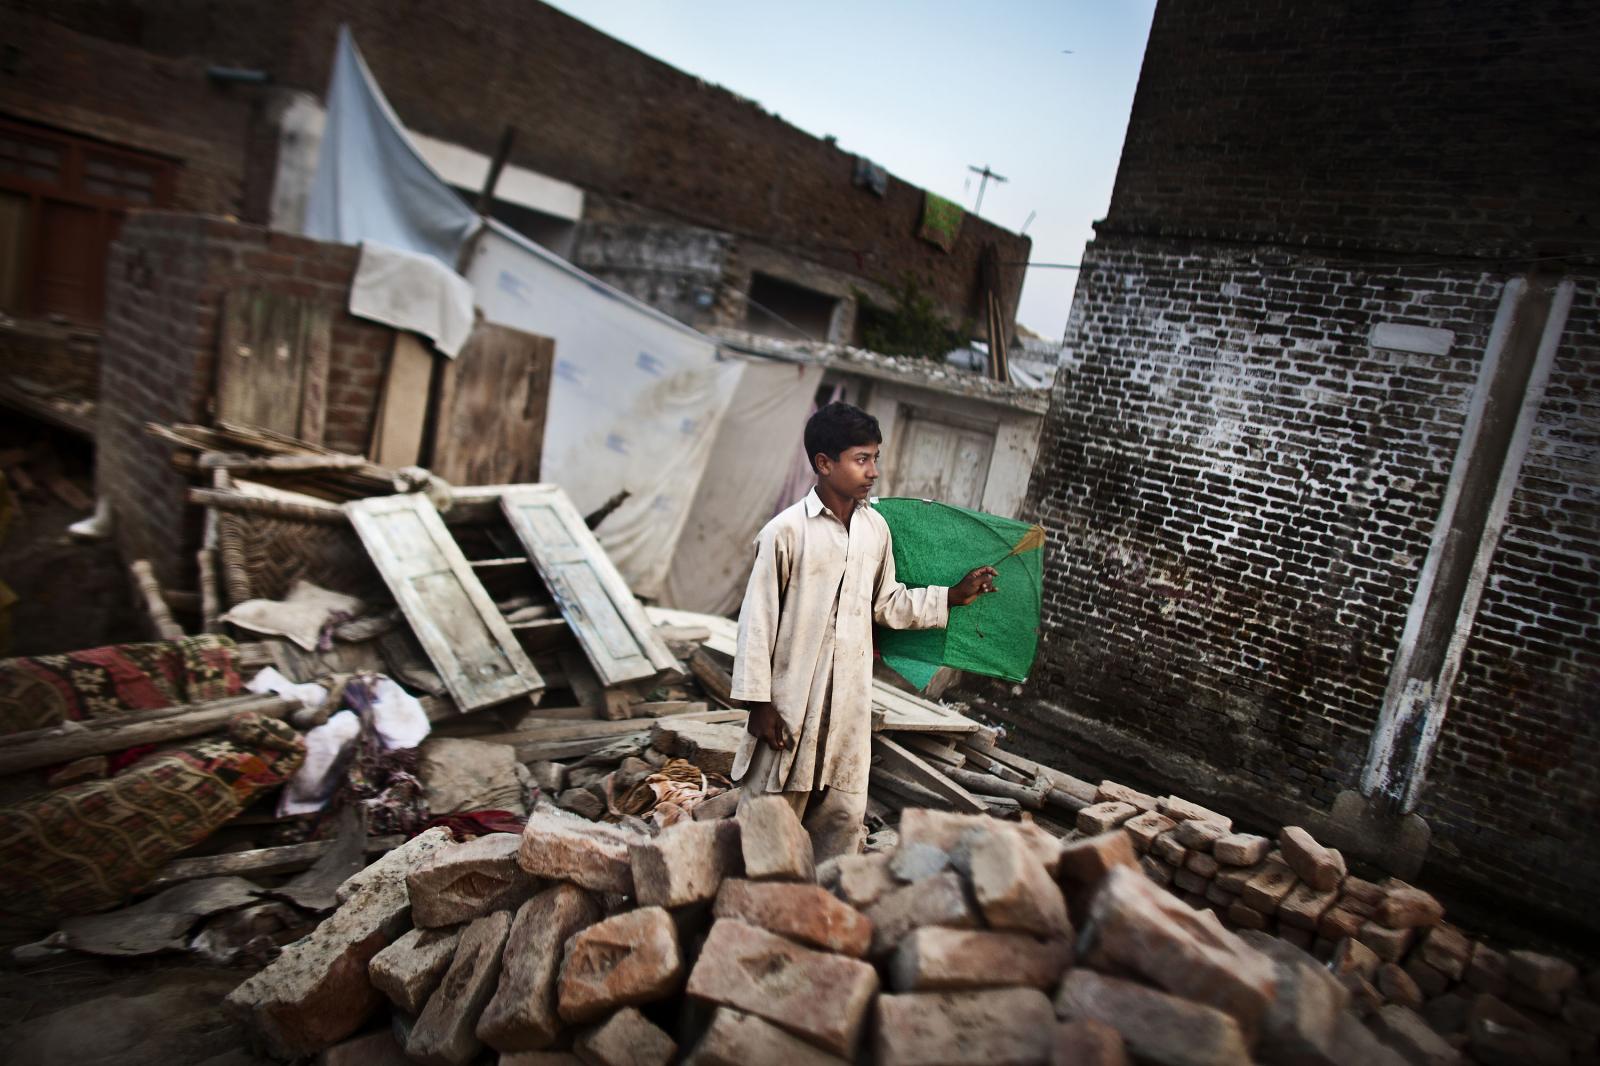 Chronicles of the monsoon - Hope amid destruction in Peshawar. Pakistan